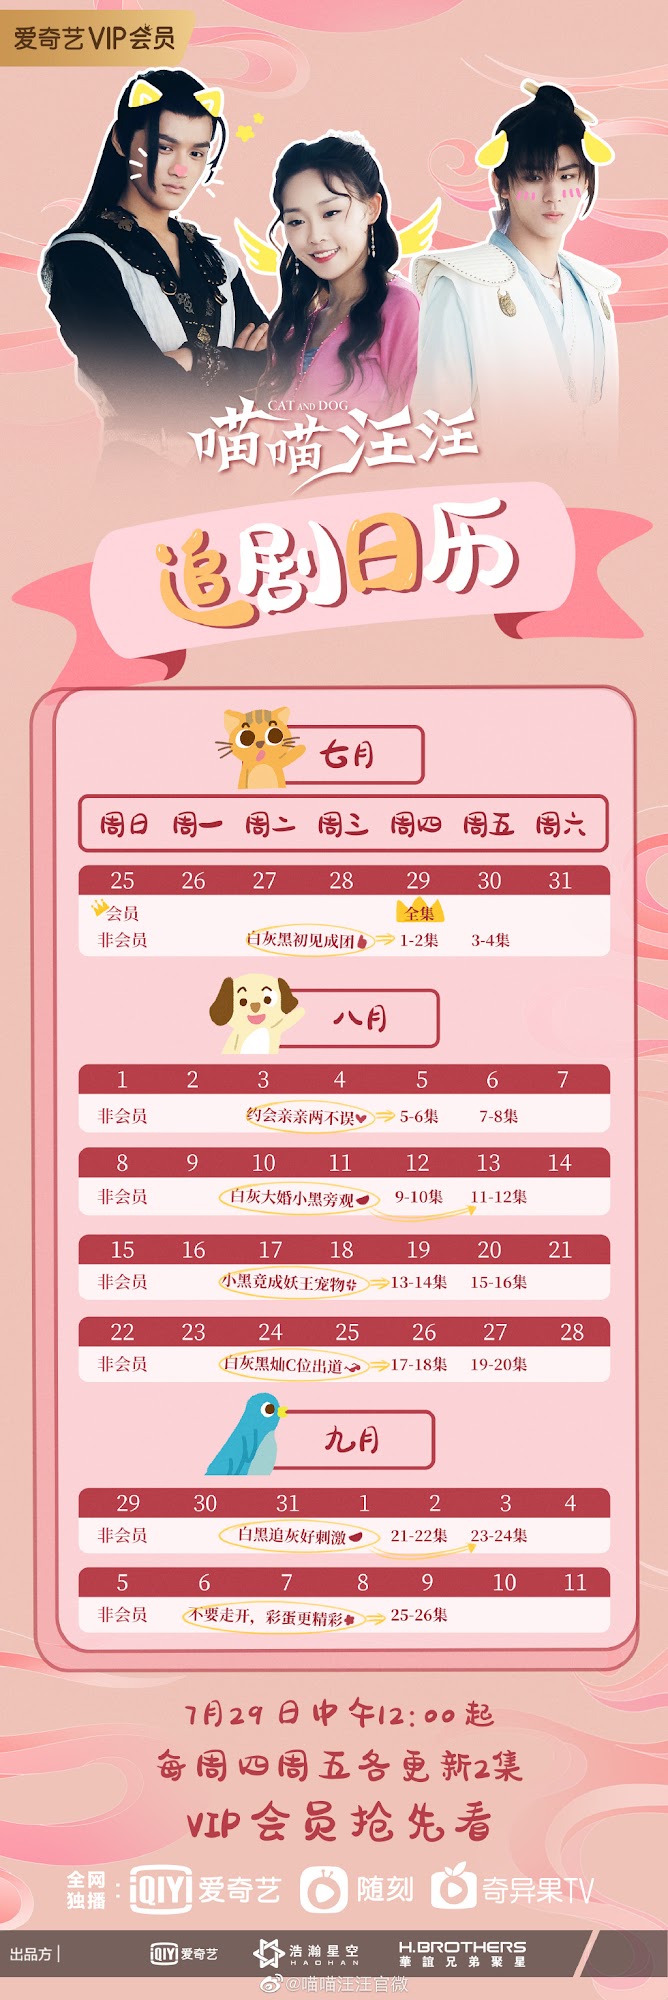 Cat and Dog China Web Drama